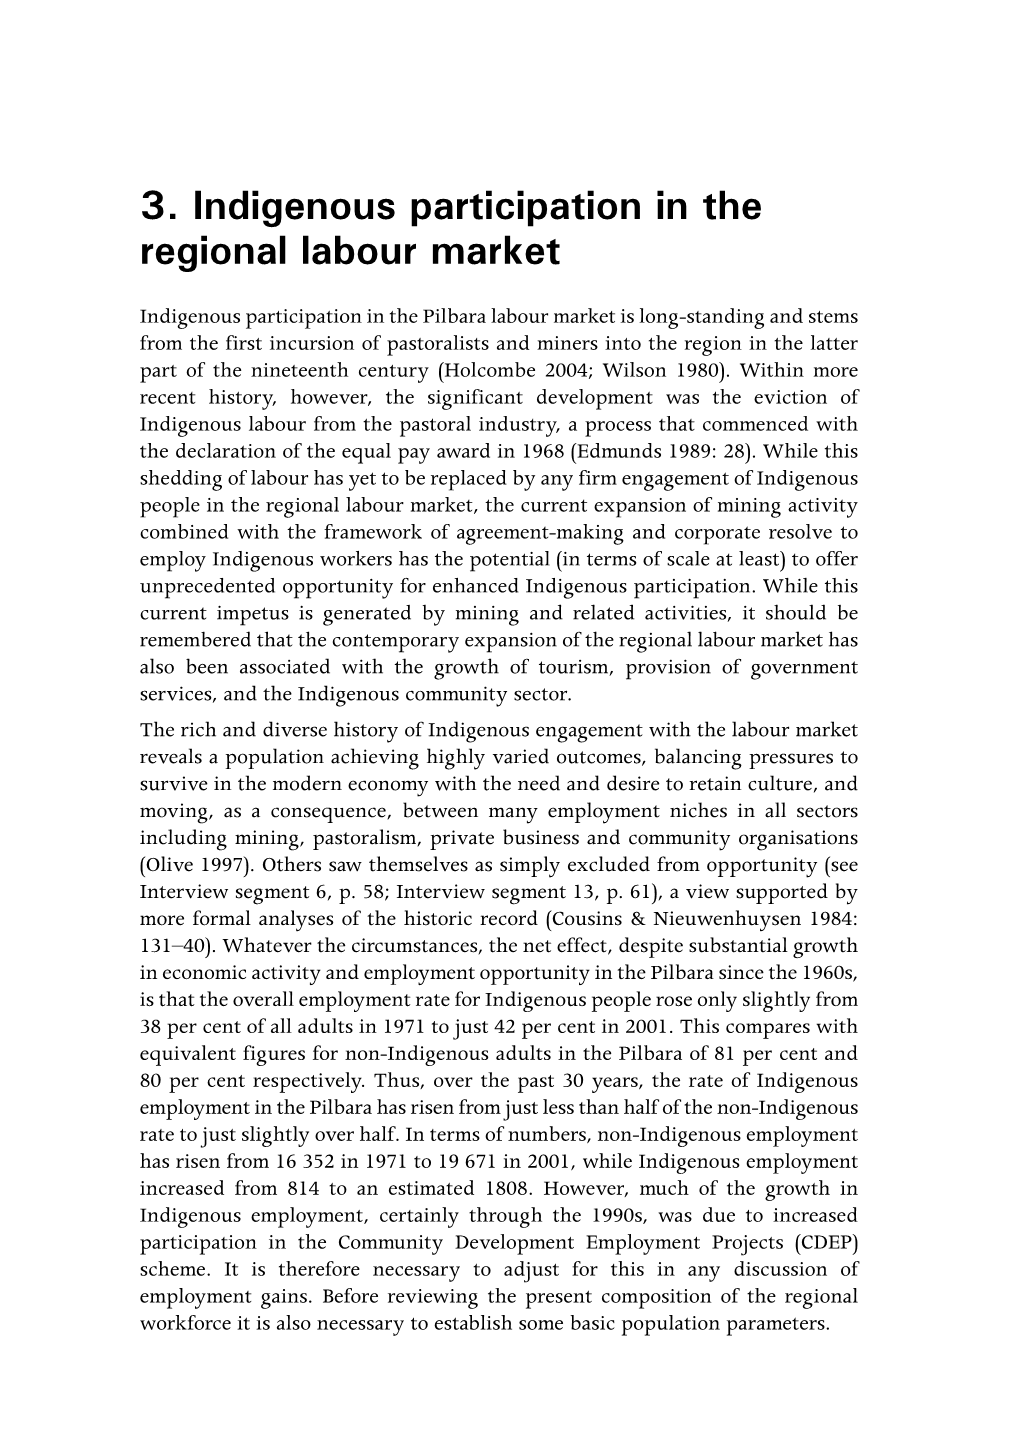 3. Indigenous Participation in the Regional Labour Market